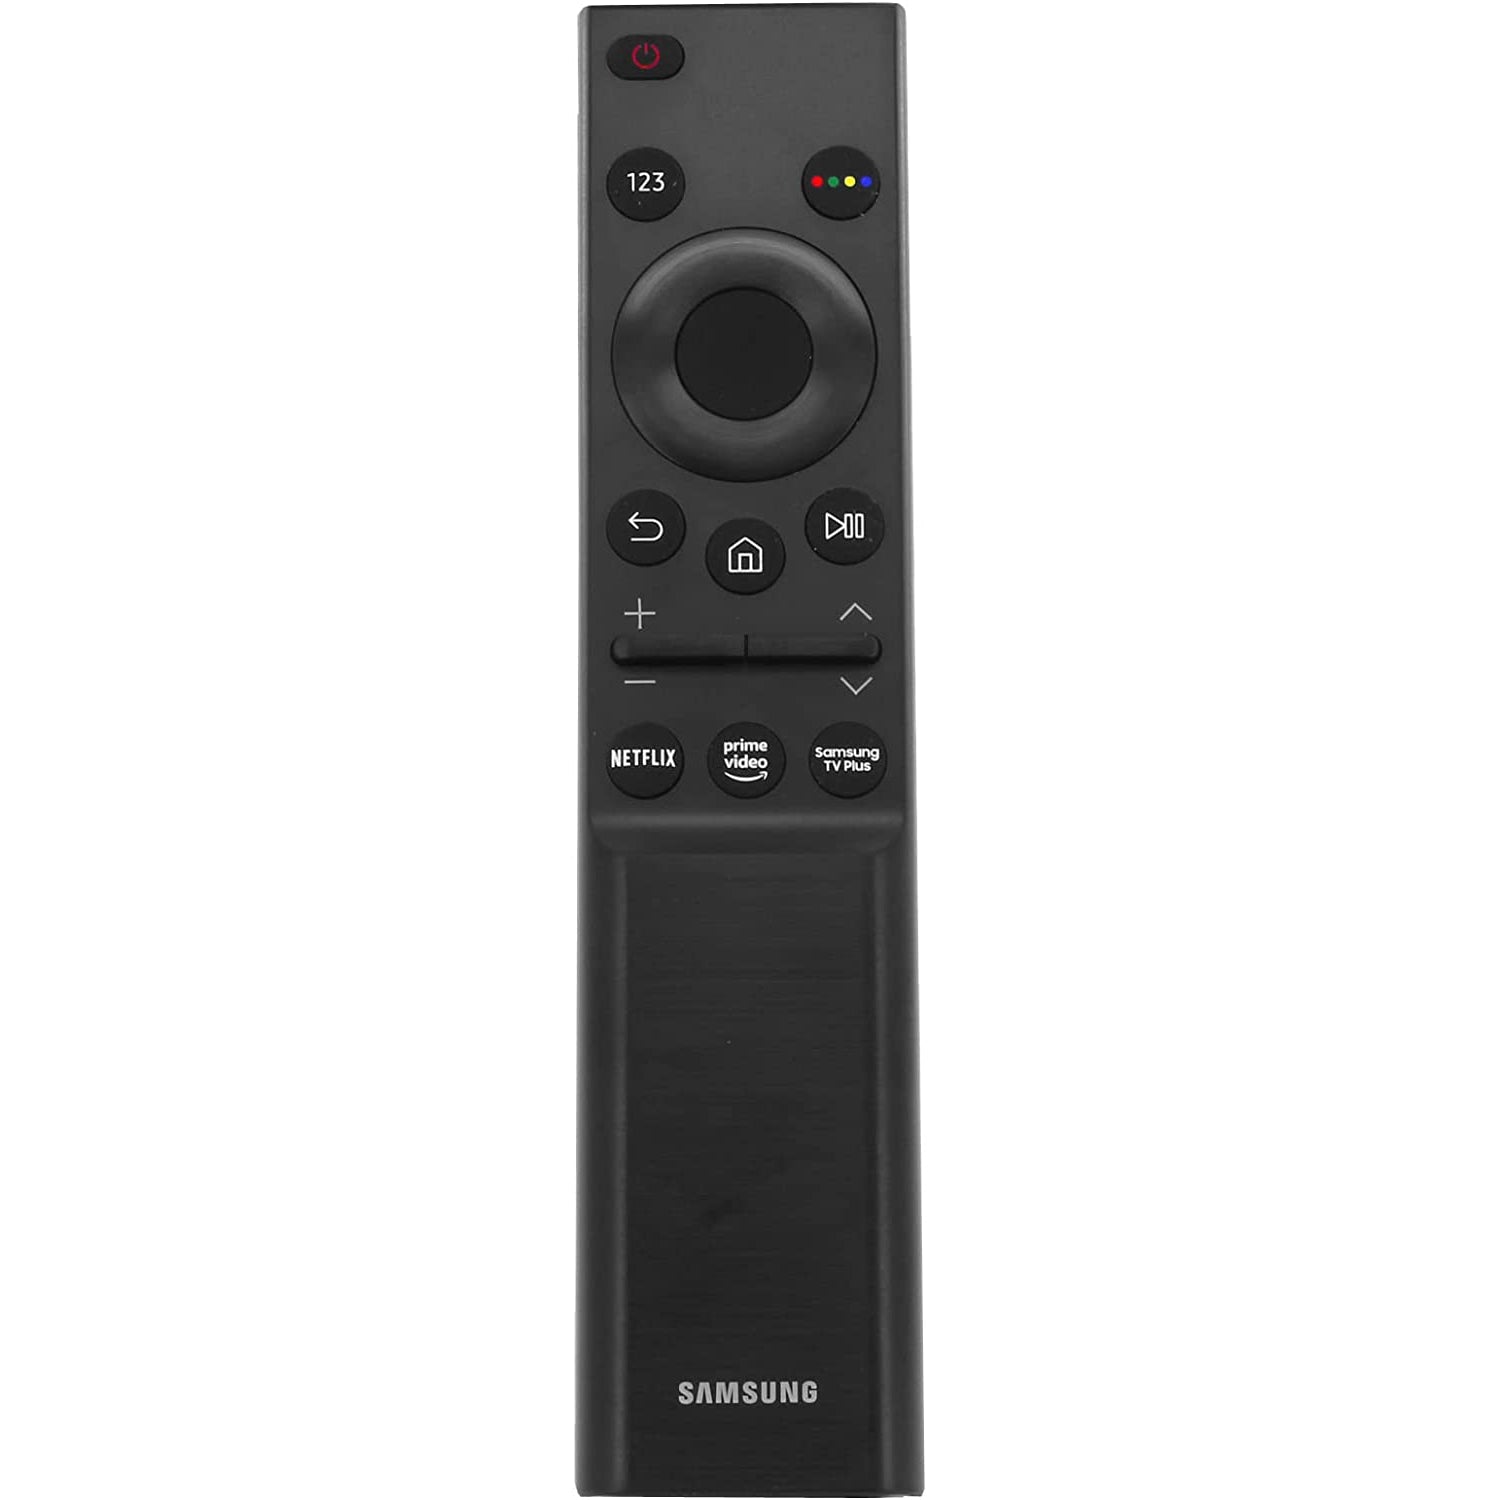 Samsung BN59-01358B Genuine Remote Control for Smart NEO QLED LED TVs 2020/21/22 models